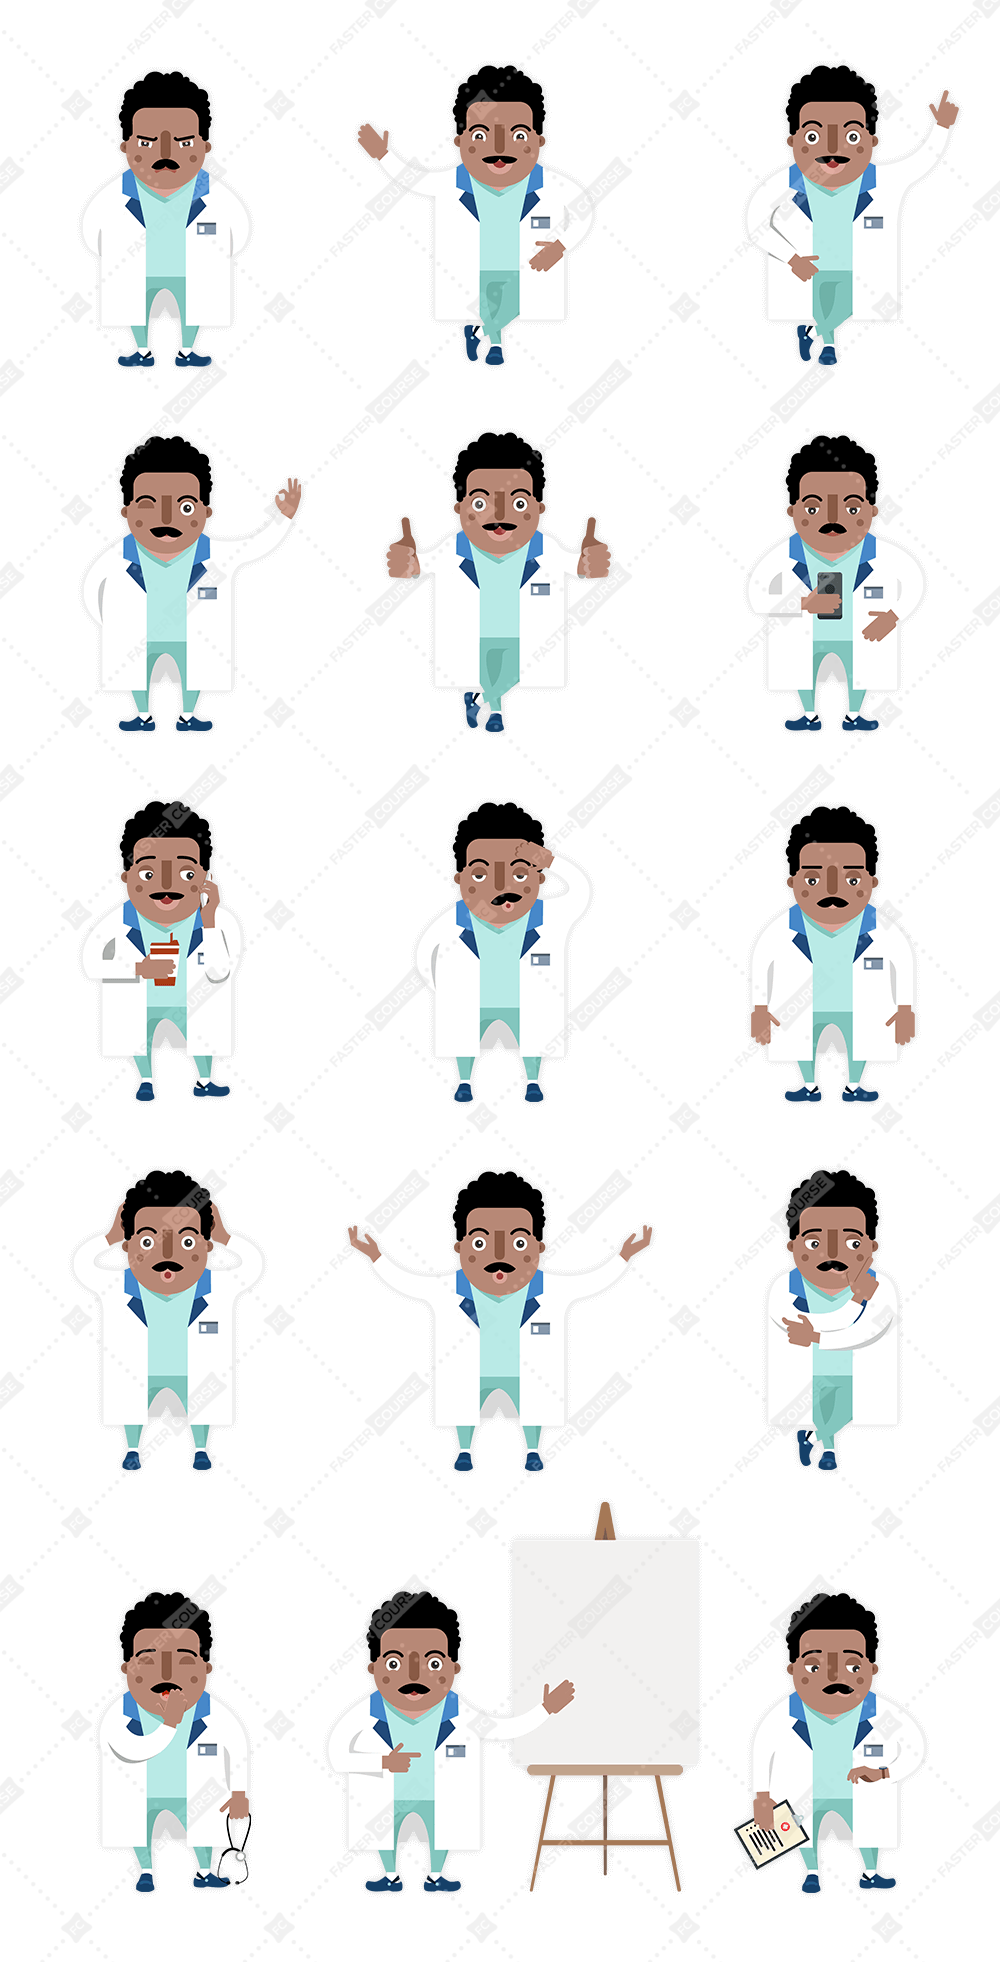 Characters_All_Poses_Hospital_Carlos_wm